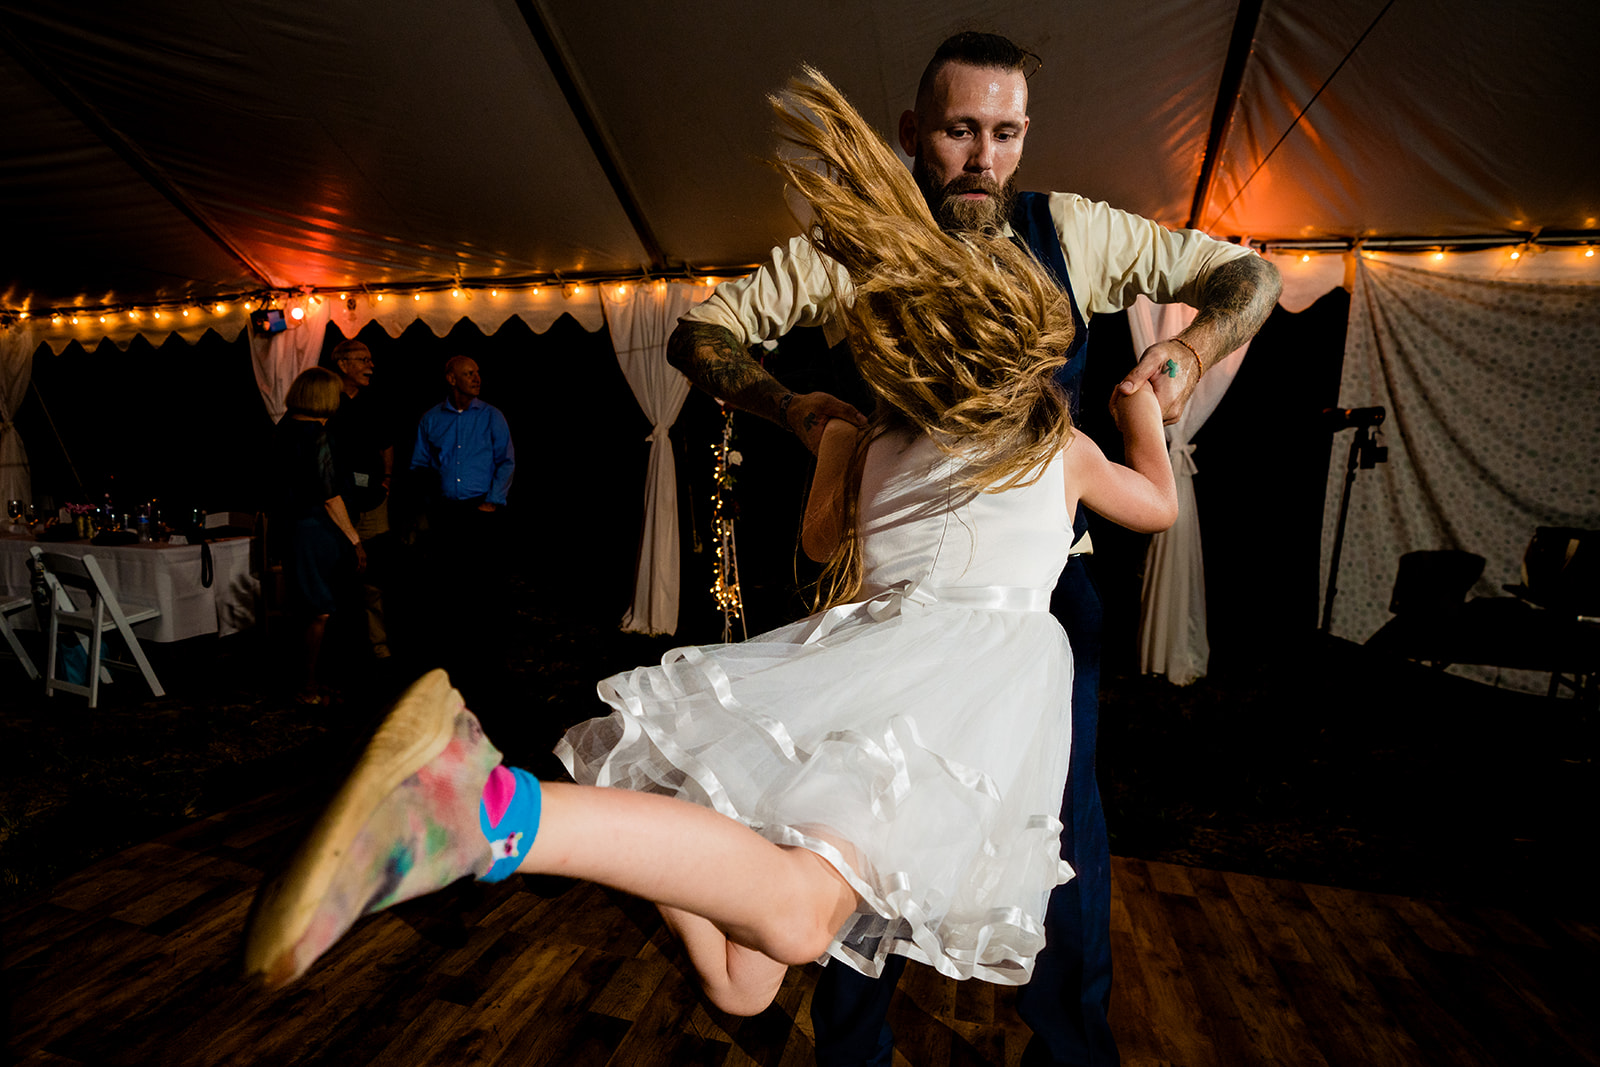 Frederick Virginia wedding reception dance floor pictures by Potok's World Photography